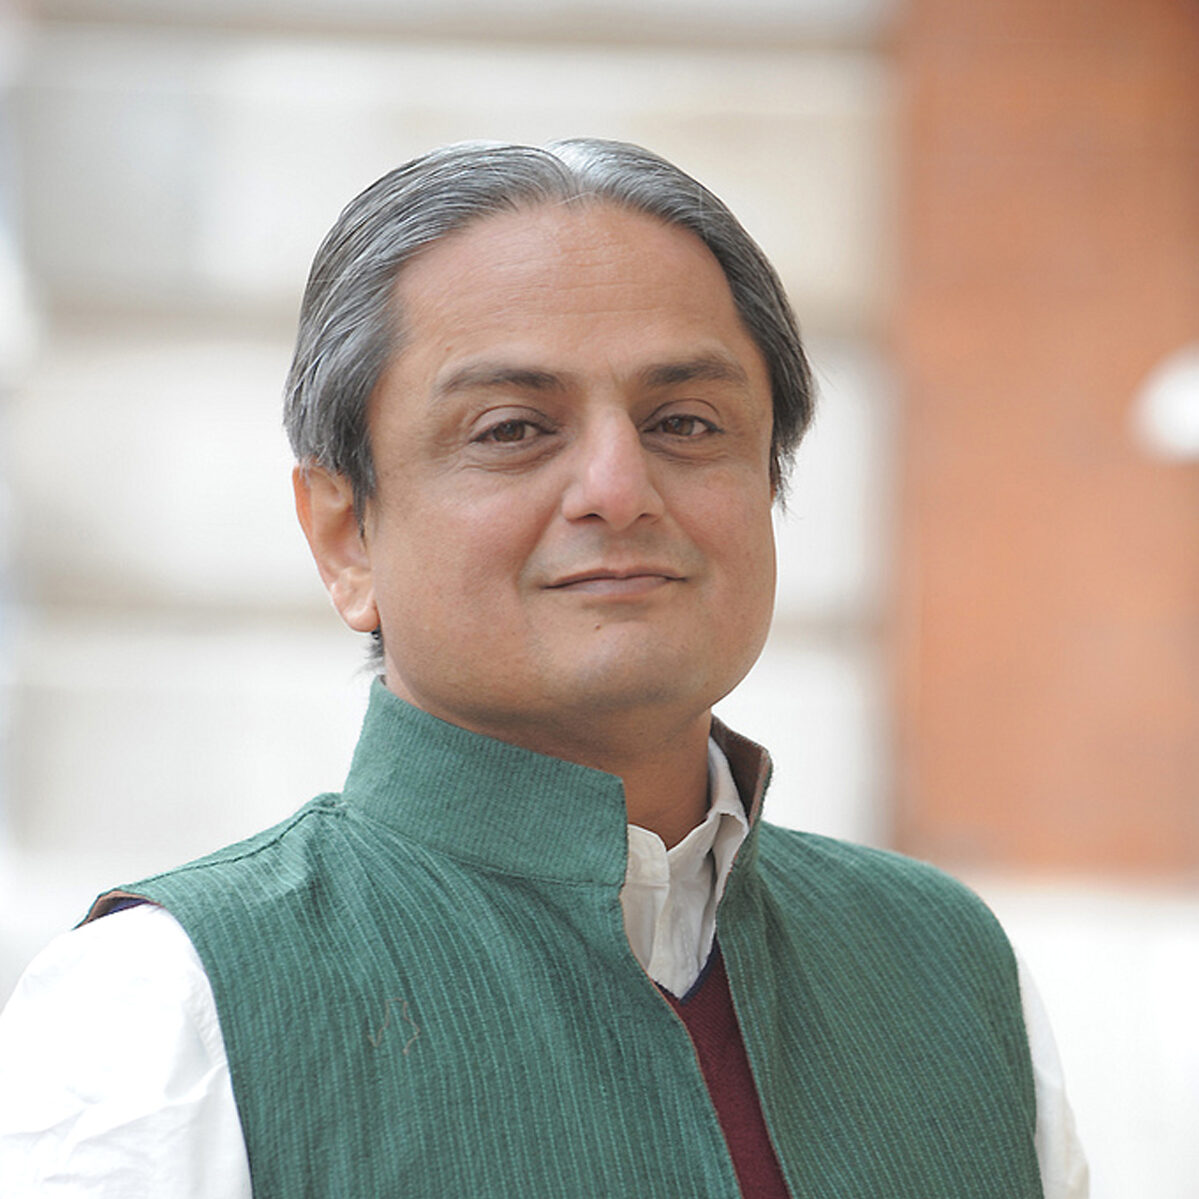 Headshot of Mihir Bhatt, headshot of a man with salt and pepper hair wearing a green top.